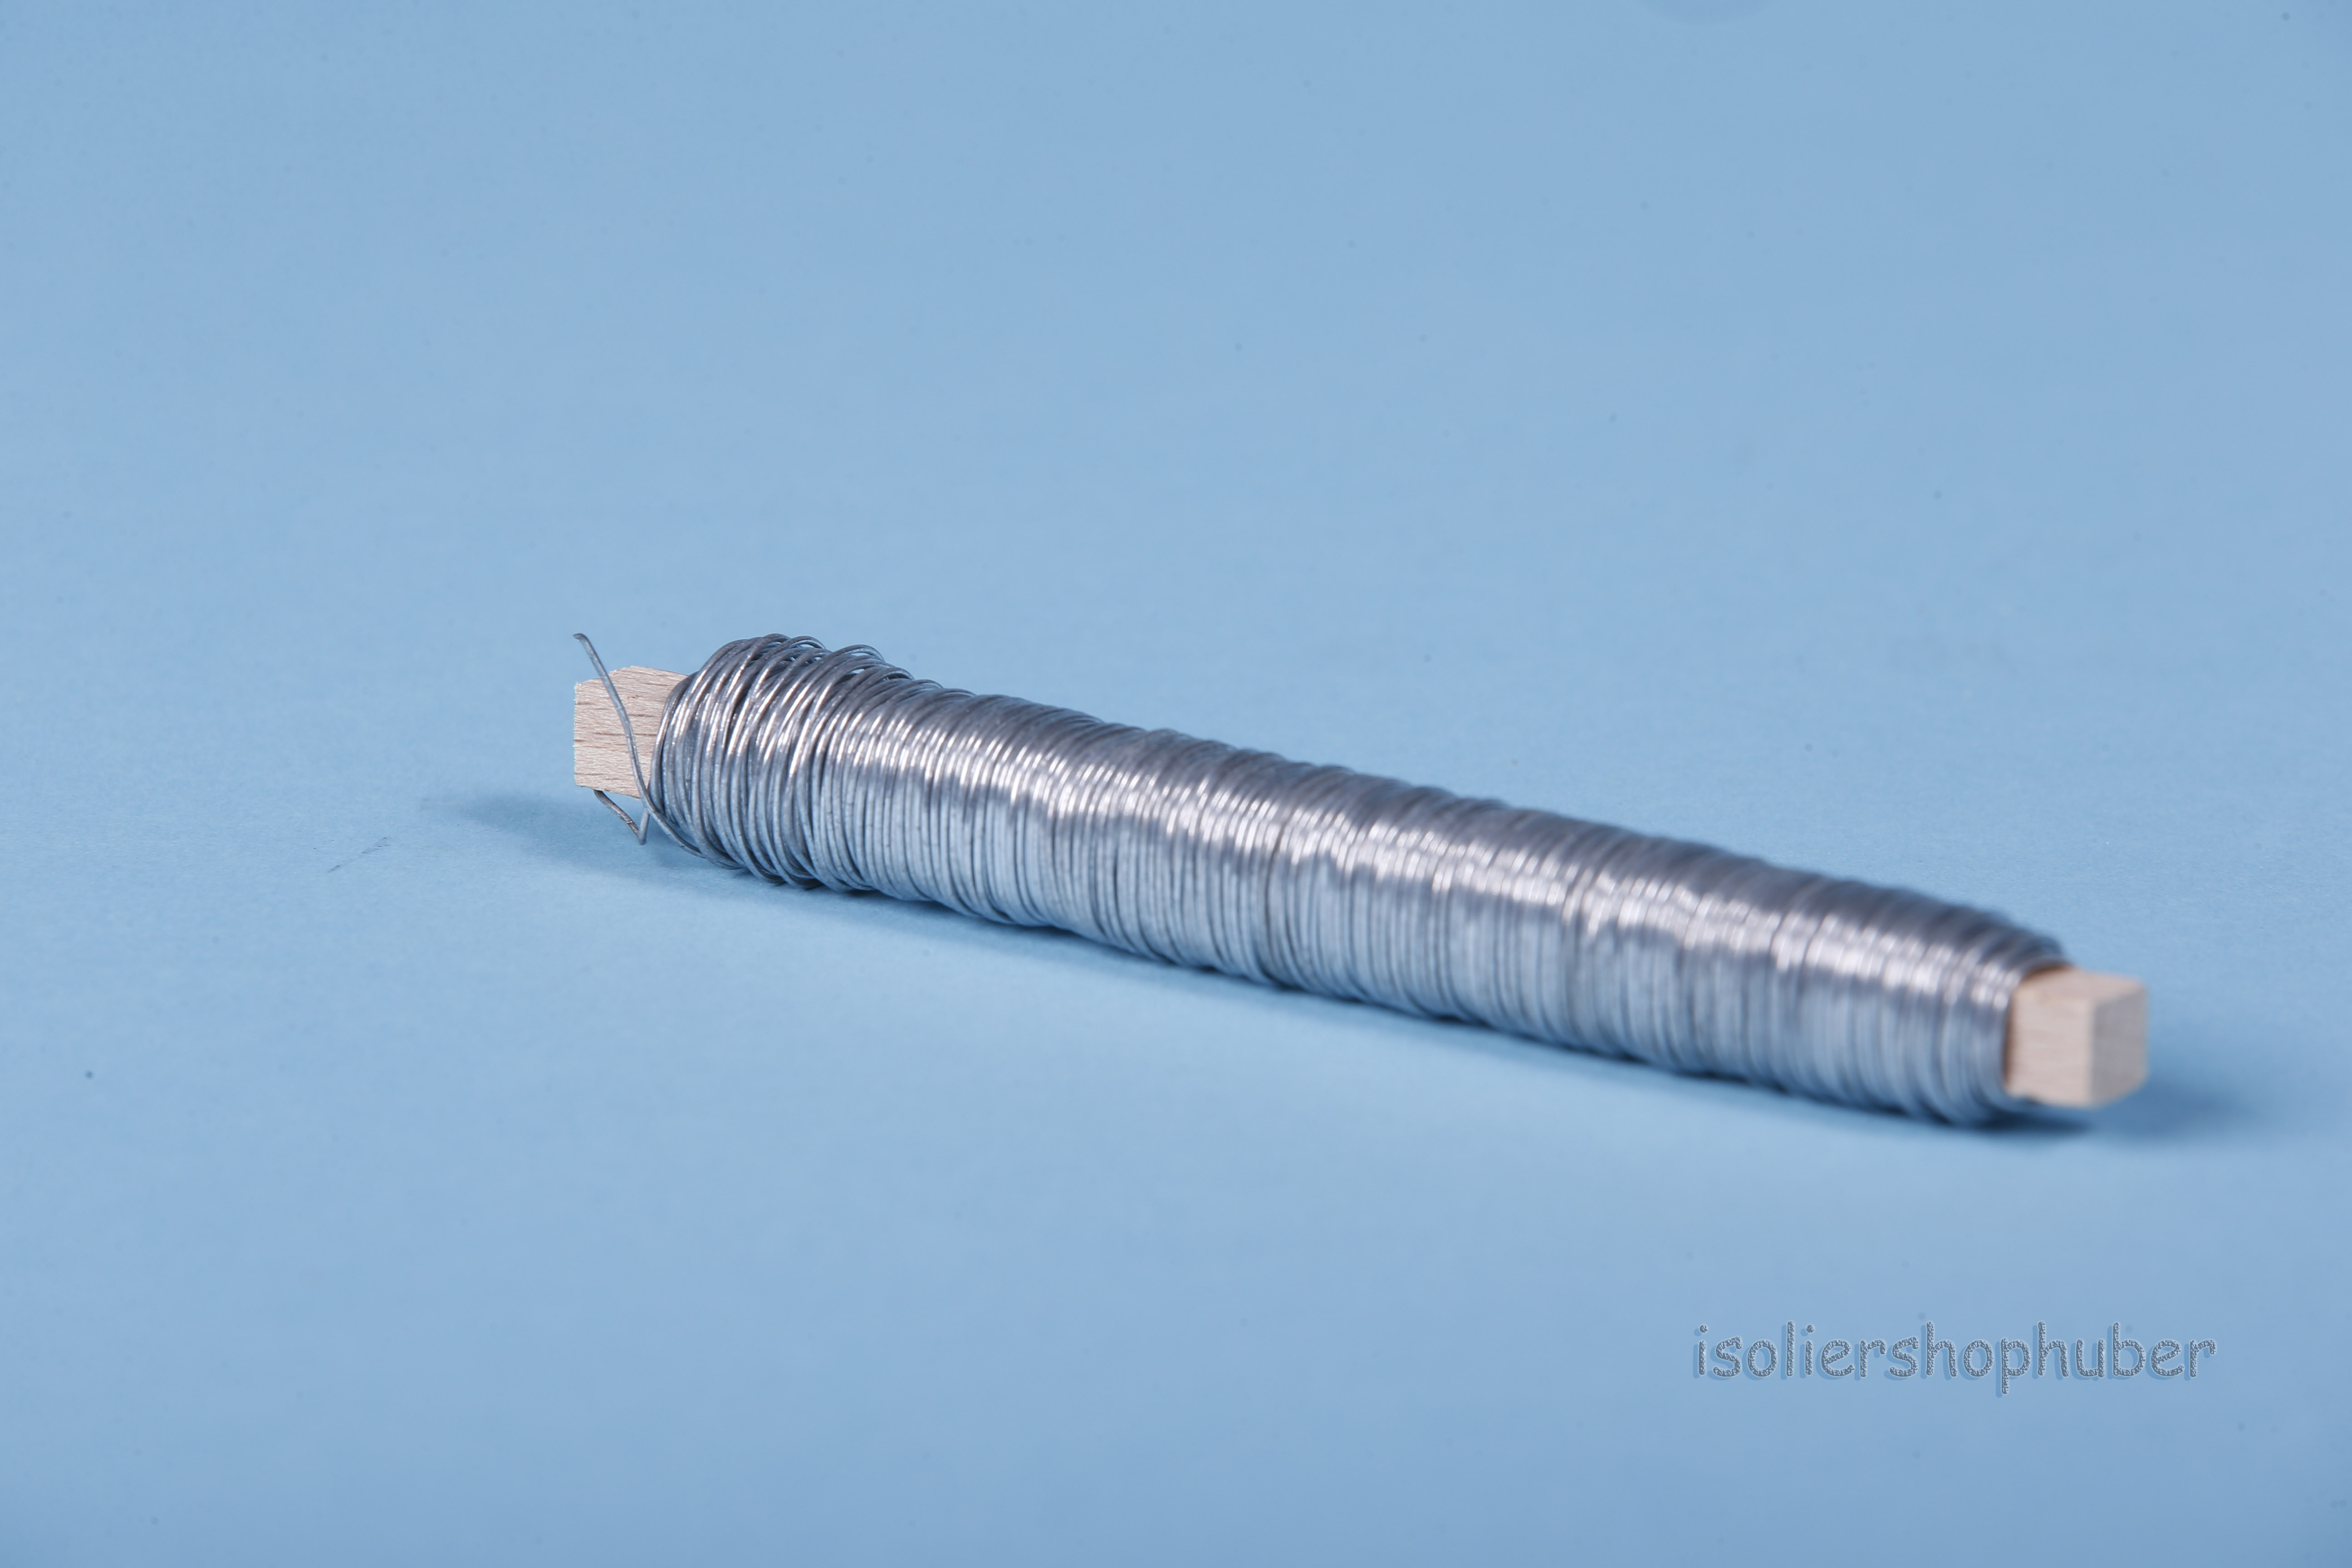 Isoliershophuber - 100 mm Rockwool TECLIT Aluminiumklebeband